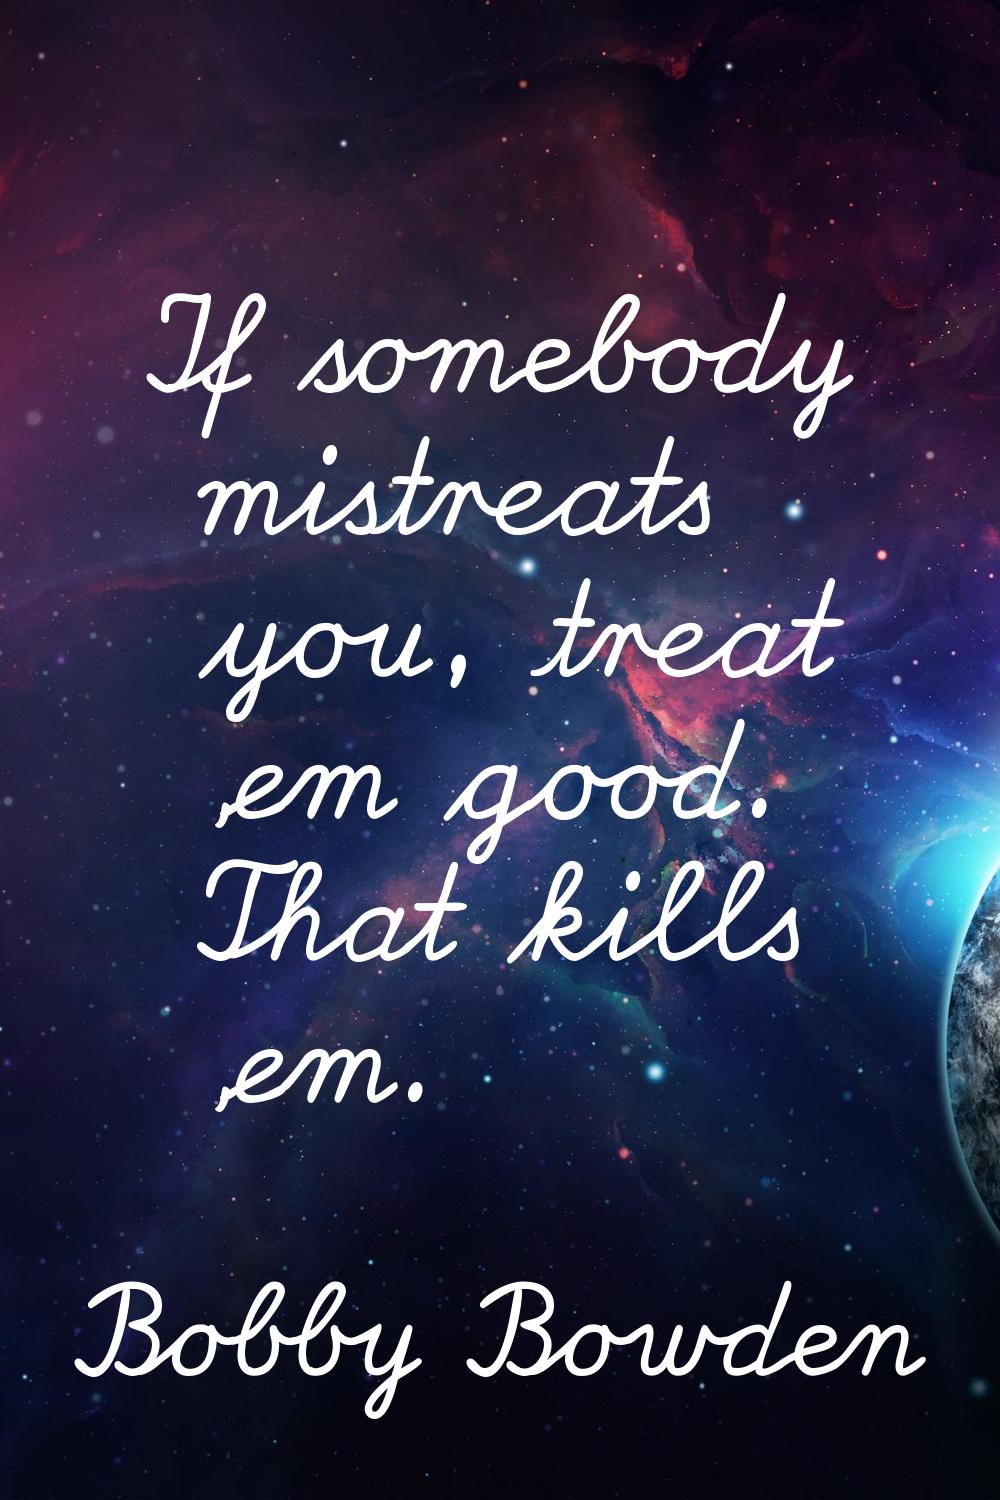 If somebody mistreats you, treat 'em good. That kills 'em.